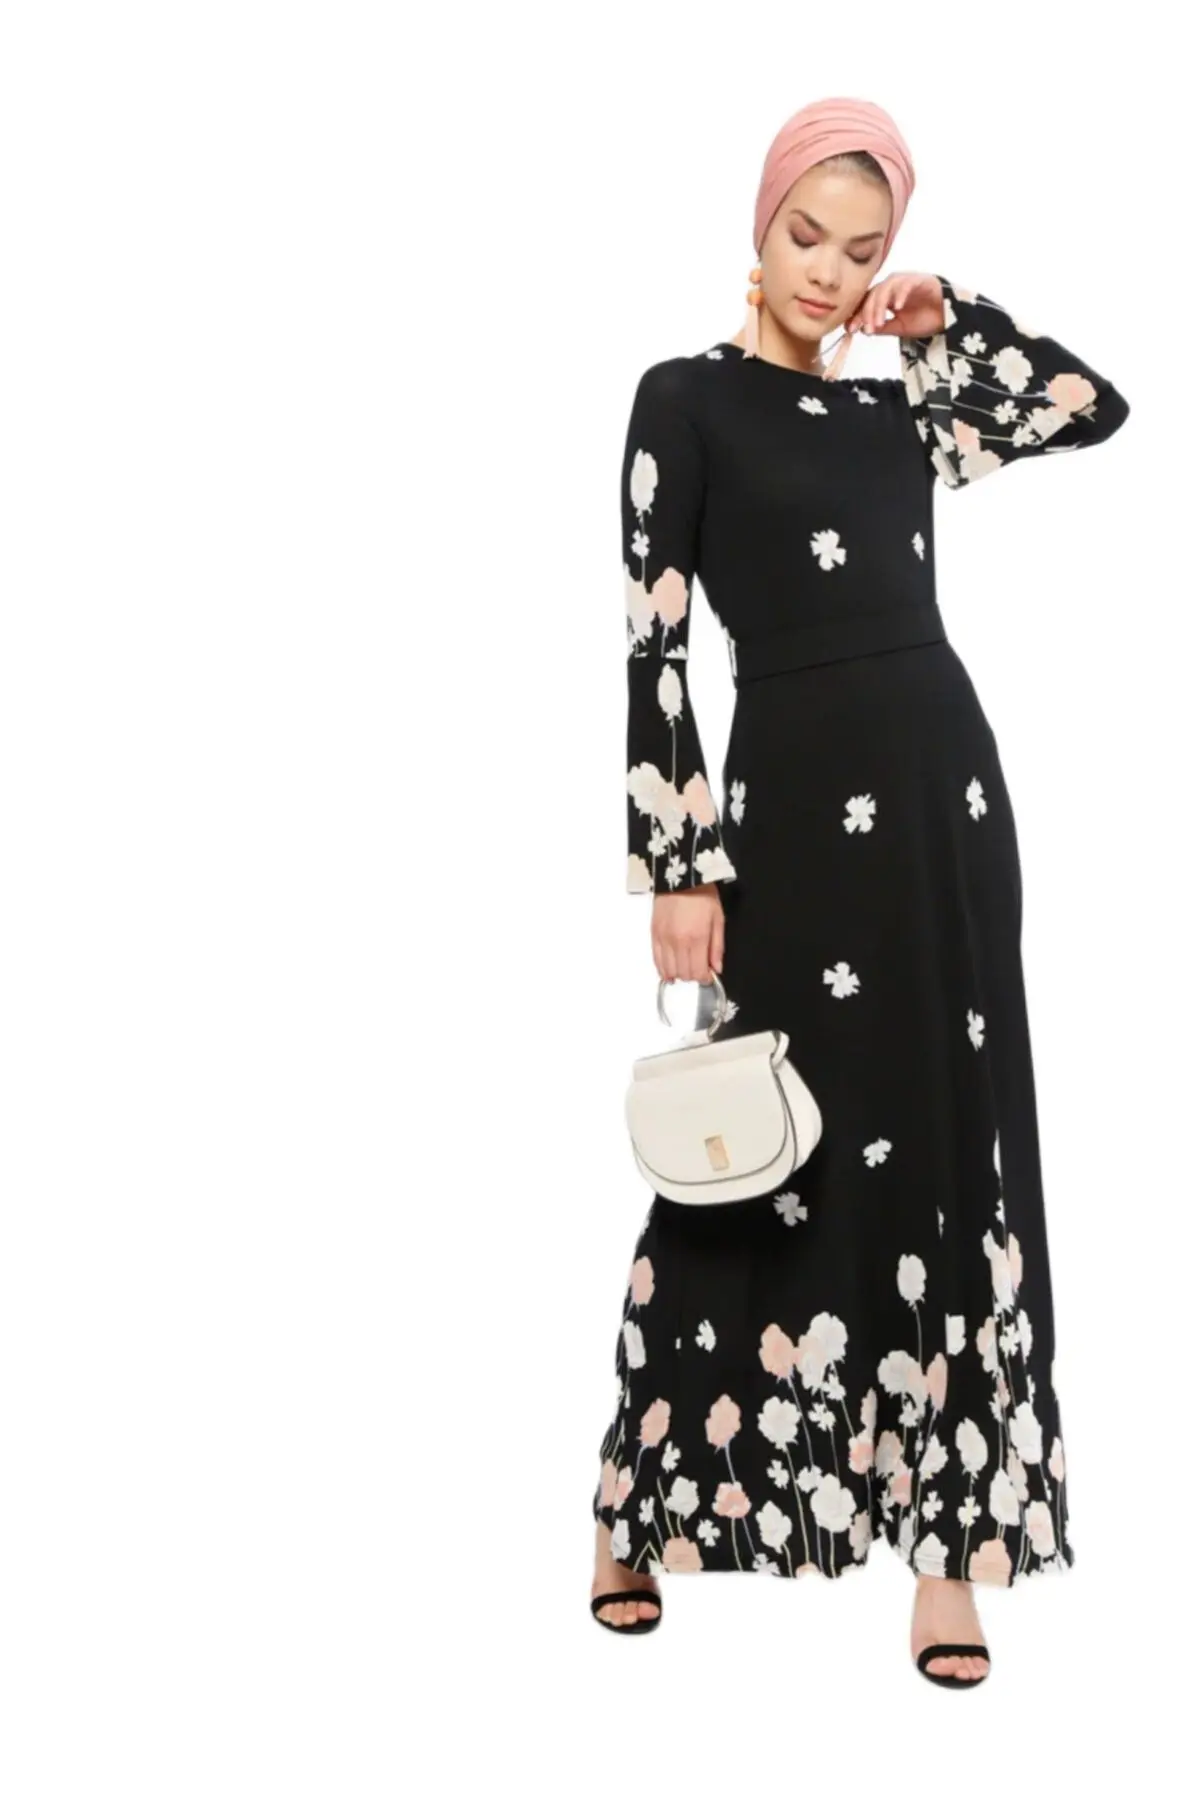 

2021 Black Patterned Dress For Women Hijab Long Sleeve Summer 100% Polyester Crew Neck Belted New Season Daily Fashıon Turkey